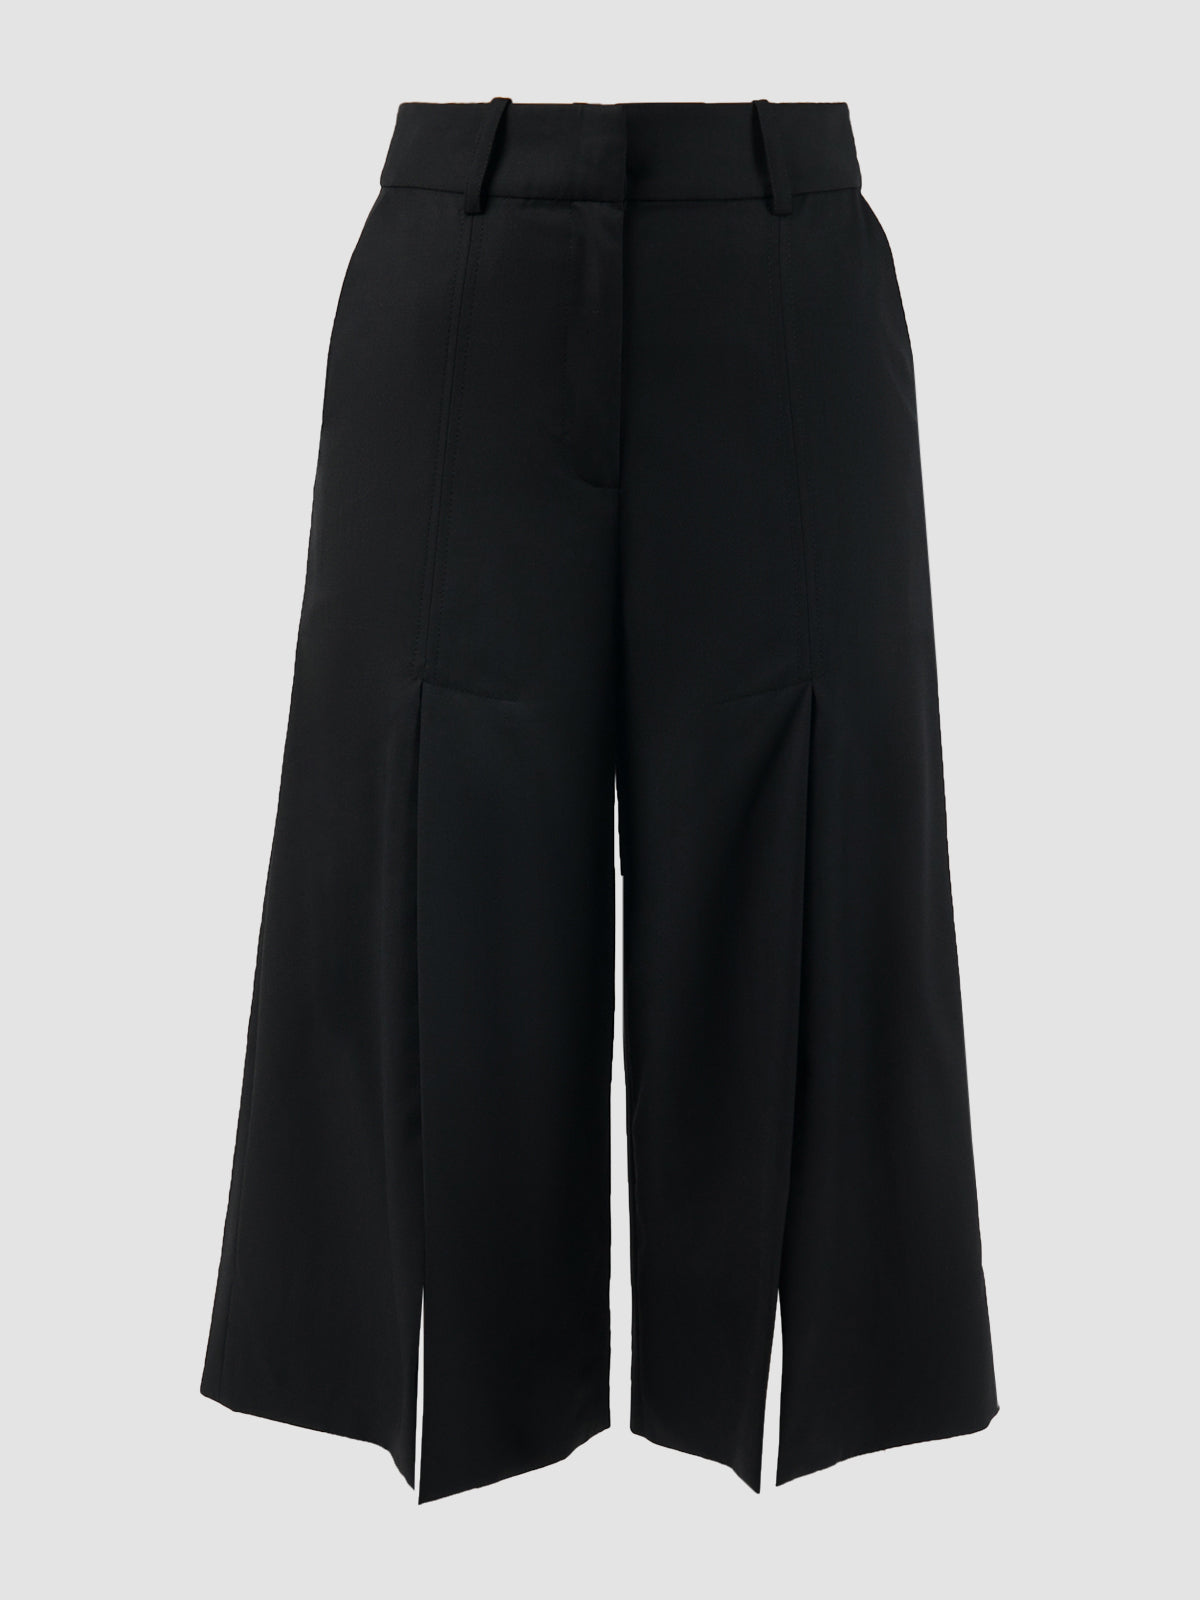 High waist black wool culottes